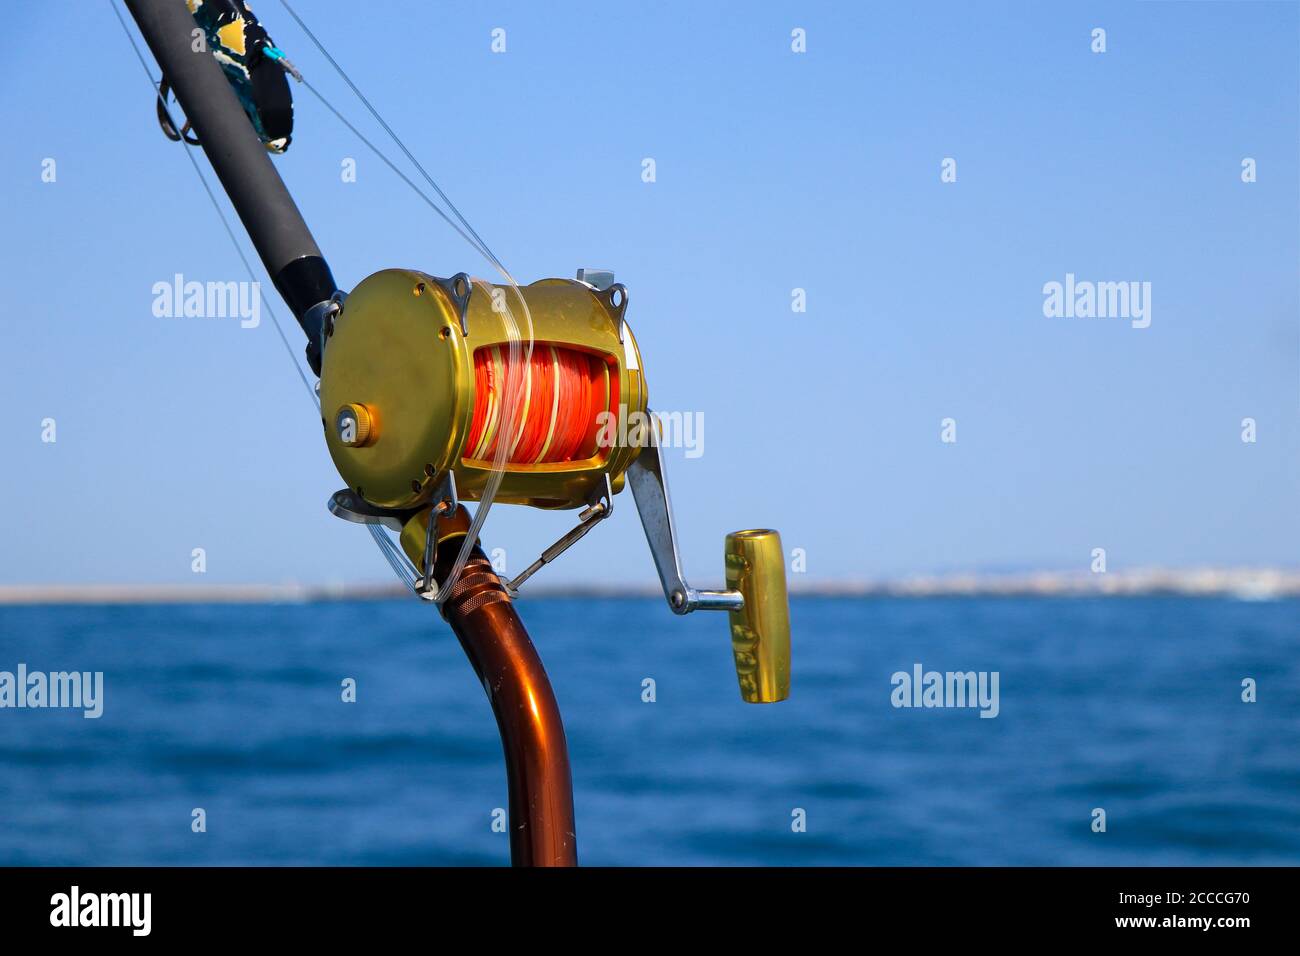 Deep Sea Fishing Reel on a boat Stock Photo - Alamy